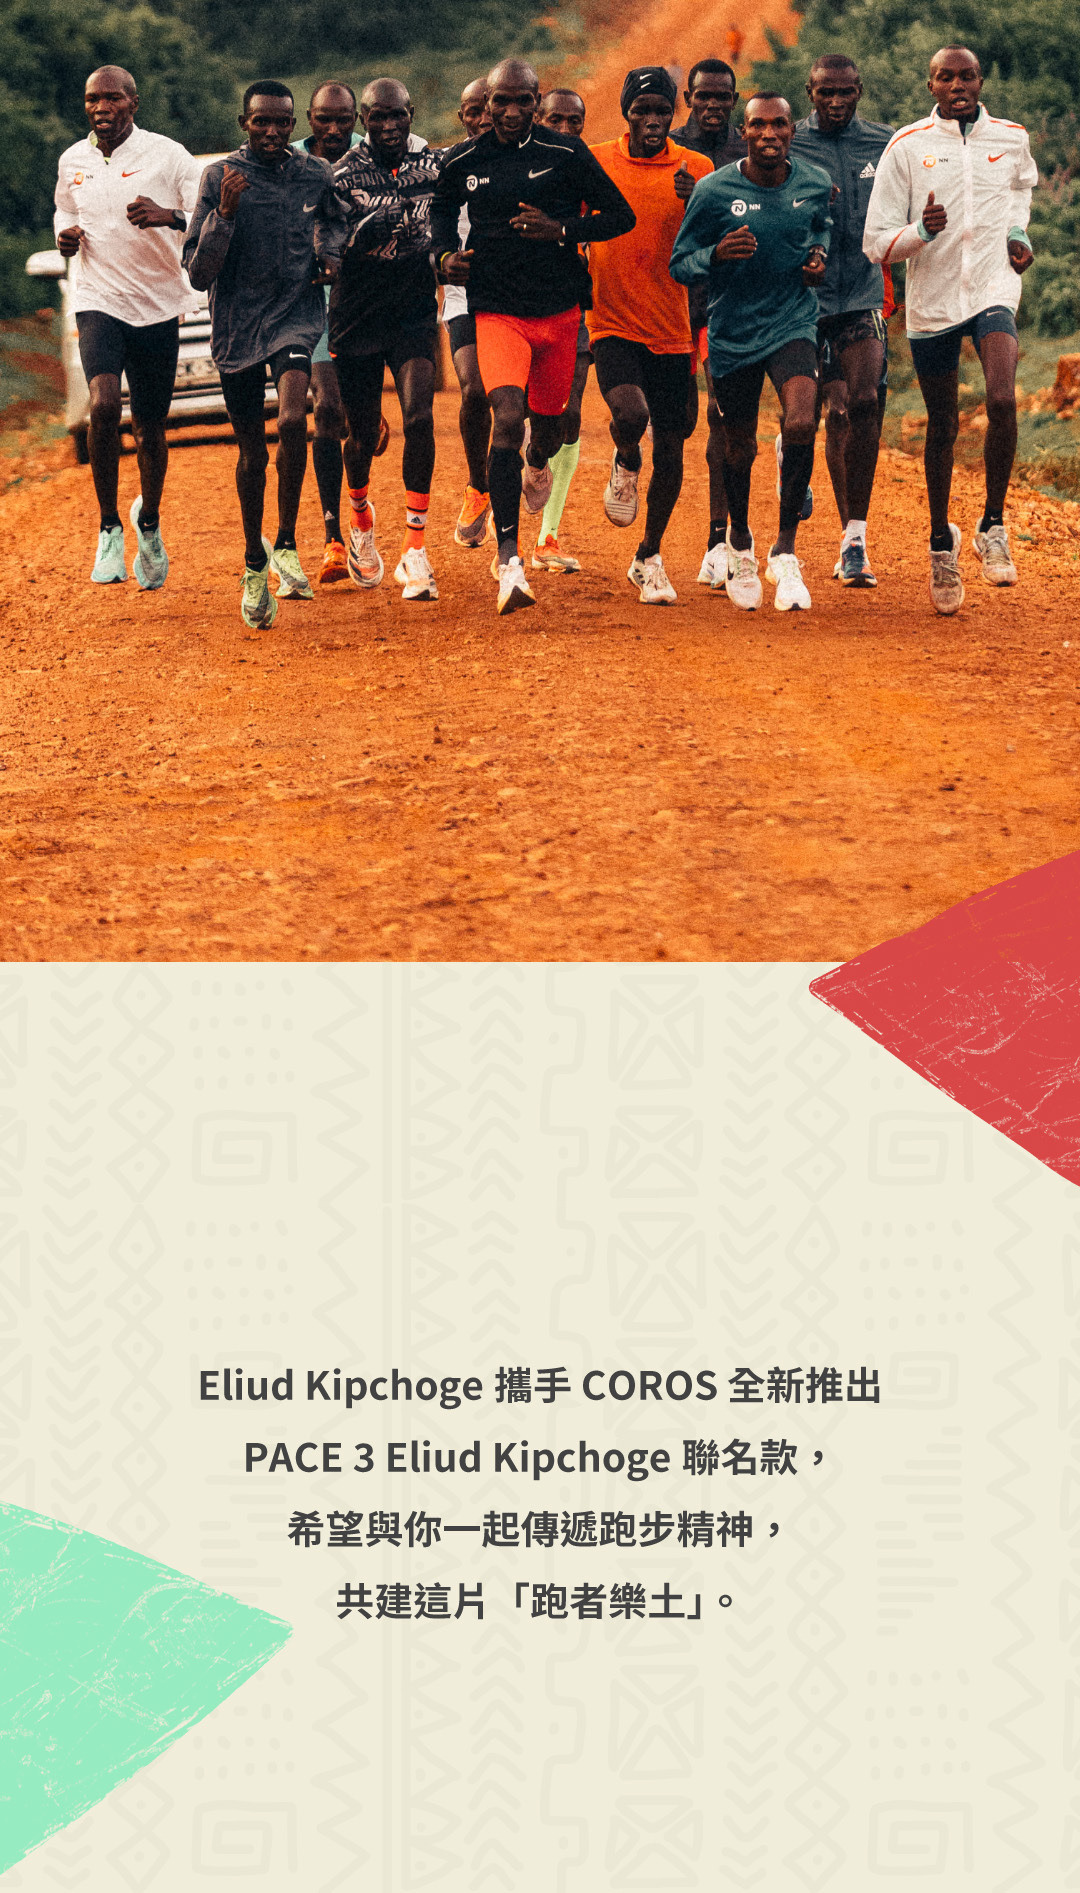 Eliud Kipchoge攜手 COROS 全新推出 PACE 3 Eliud Kipchoge聯名款， 希望與你一起傳遞跑步精神， 共建這片「跑者樂土」。